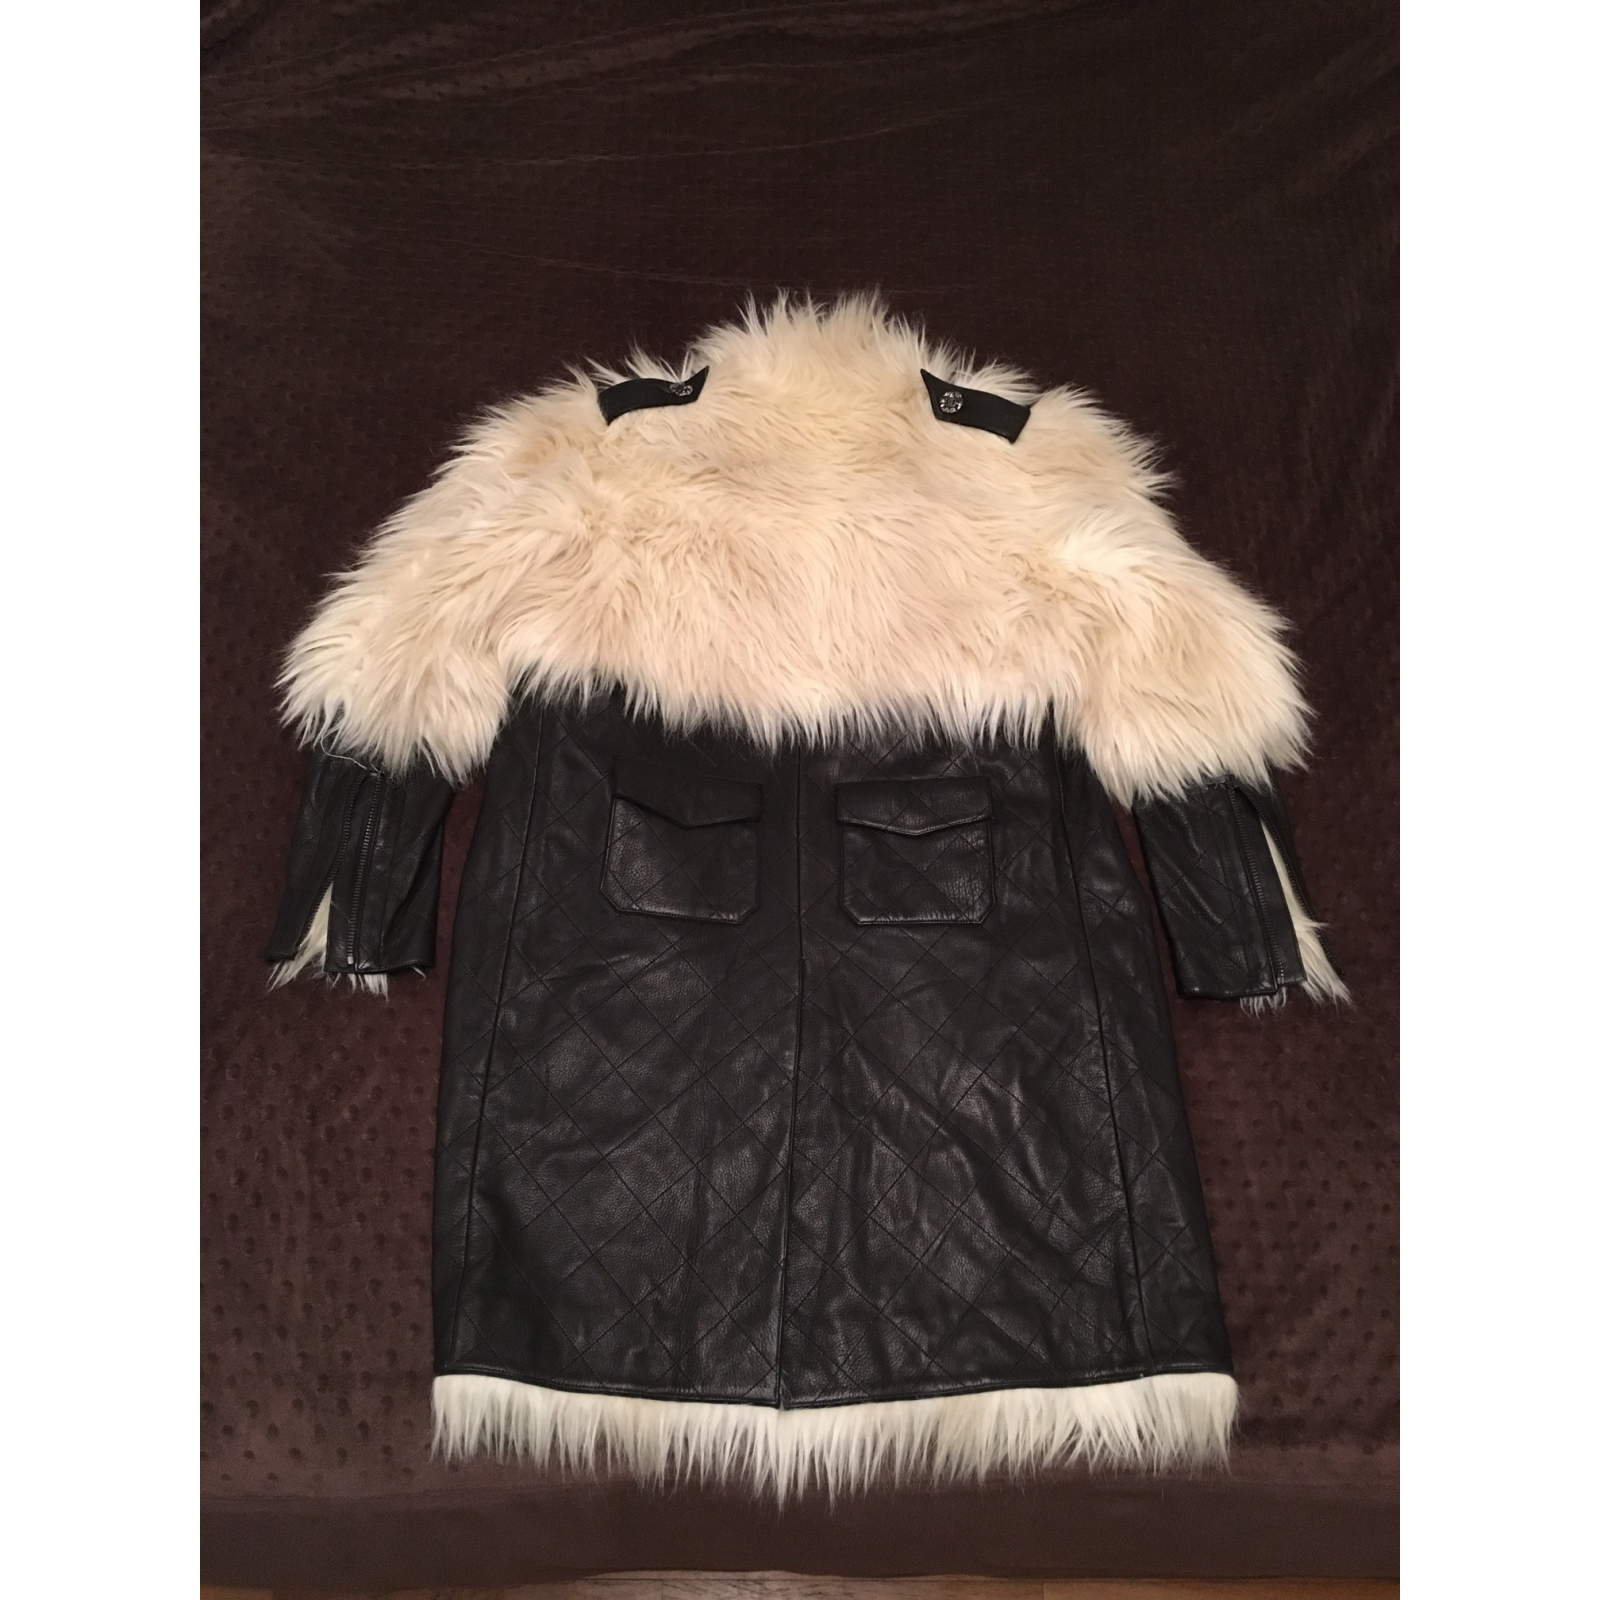 Chanel lamb leather coat